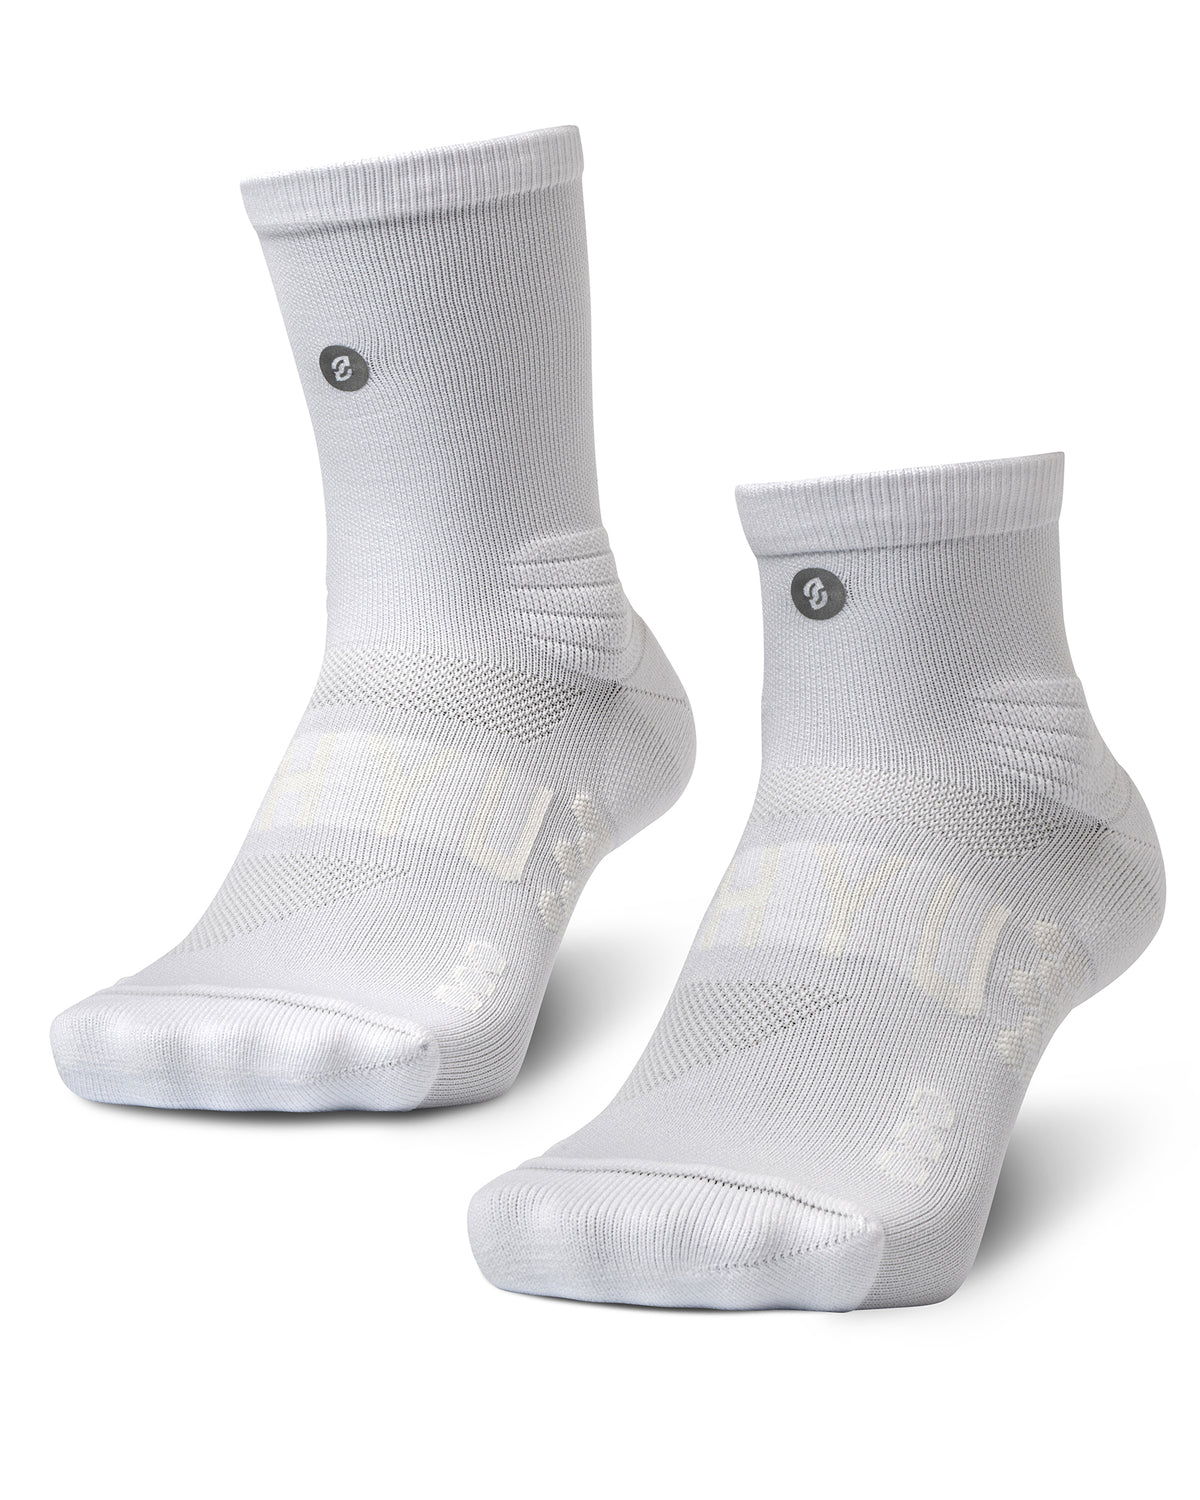 SHYU racing socks - white | white | white